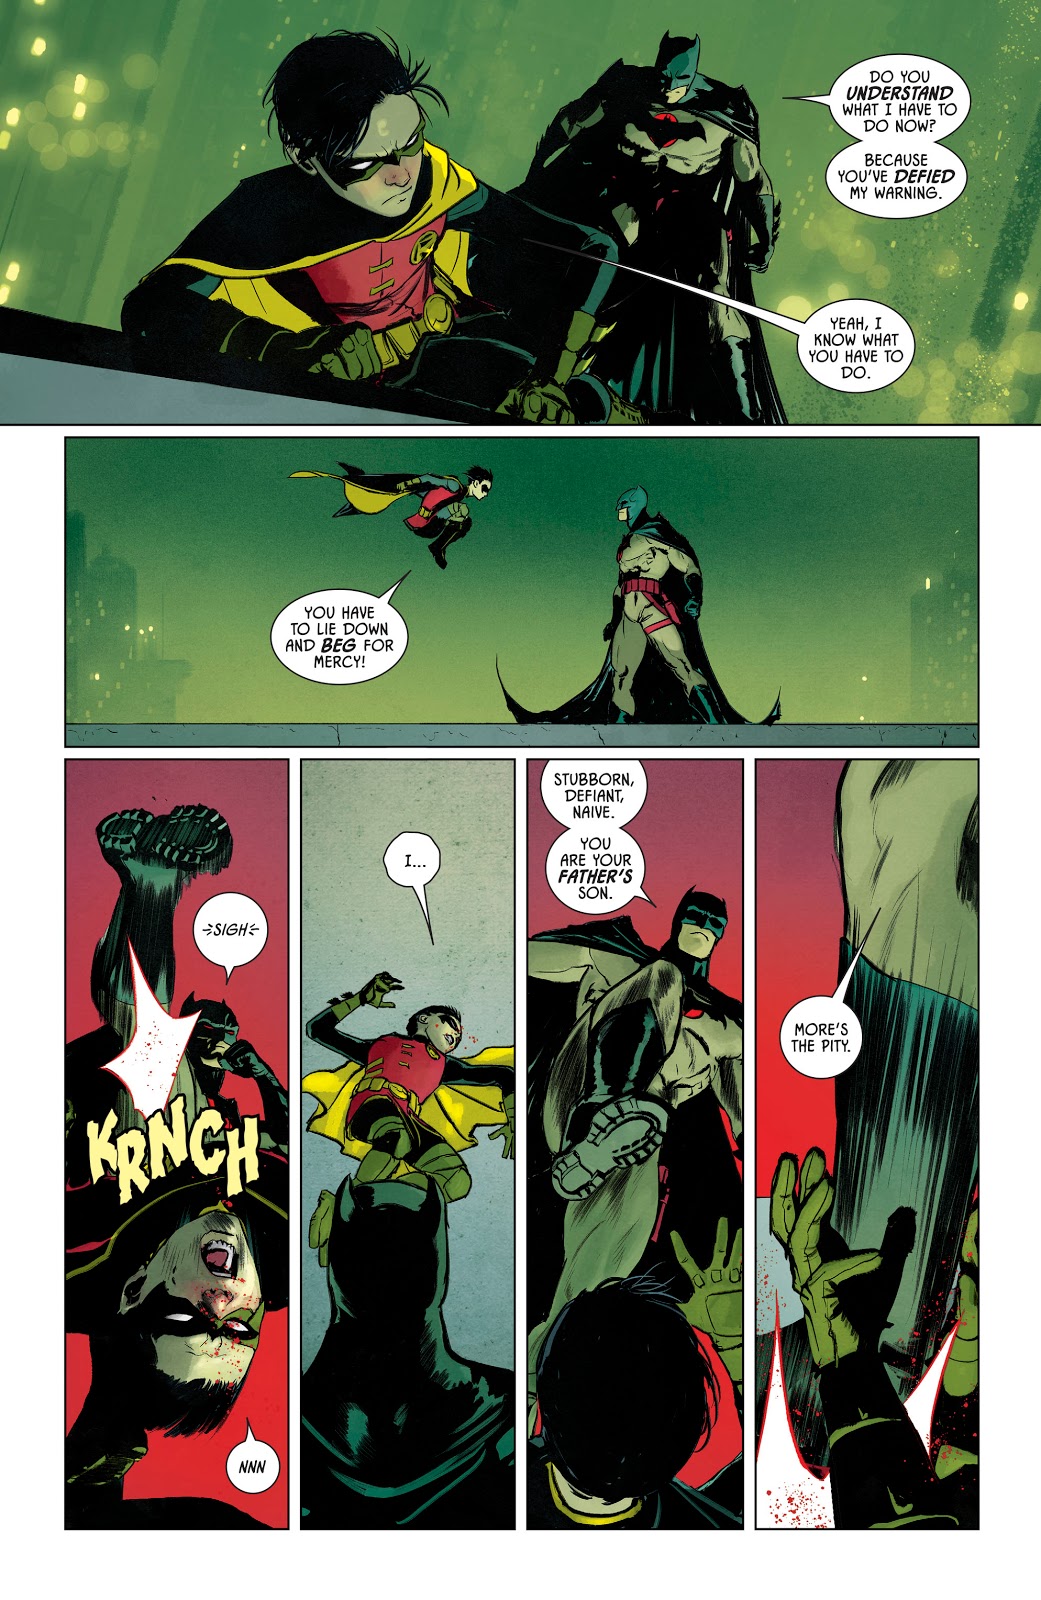 Robin VS Batman (Thomas Wayne)